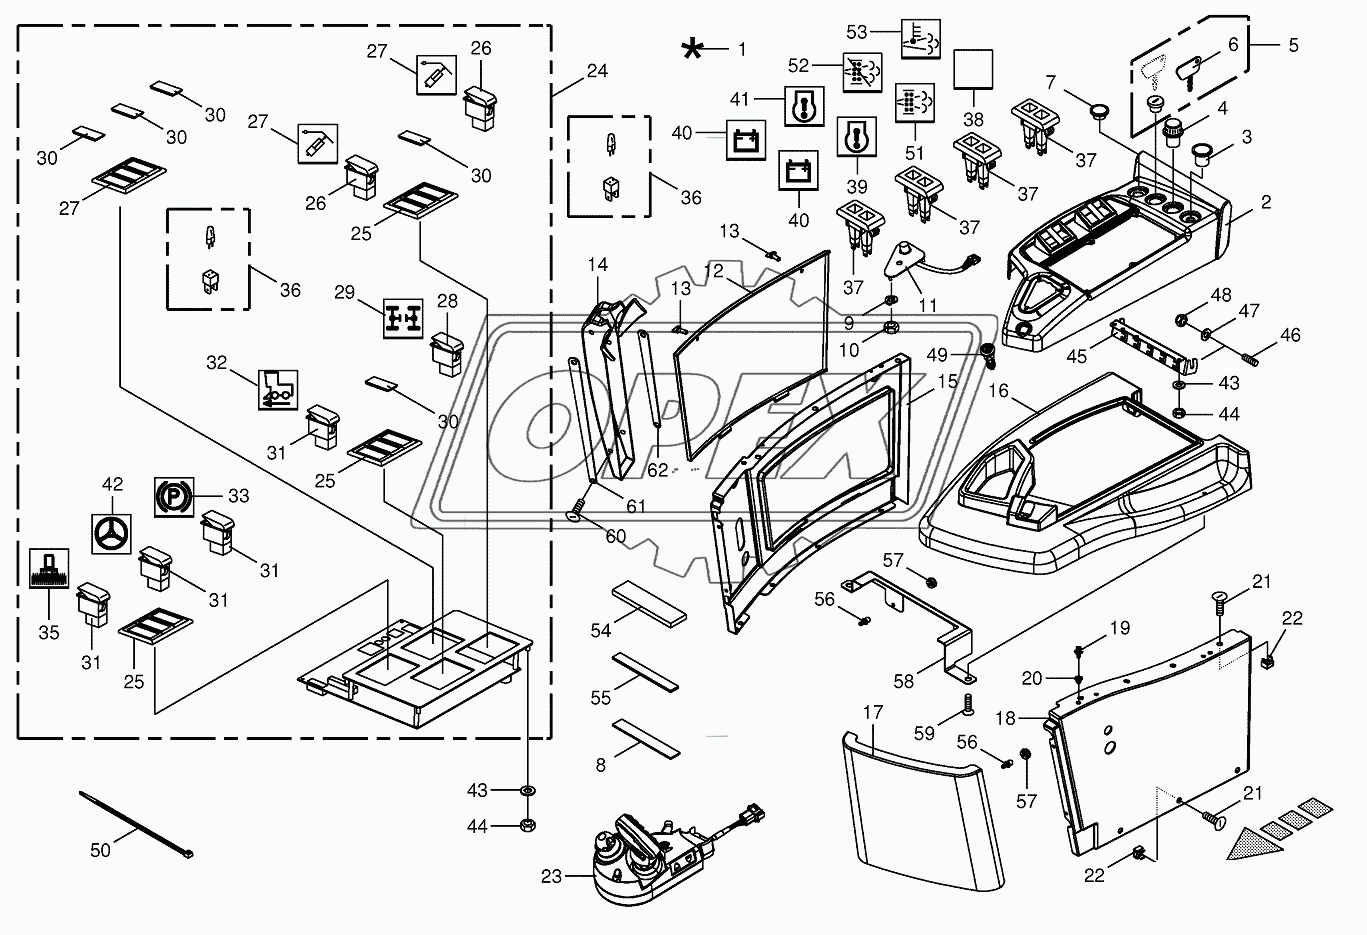 Control box mounting parts